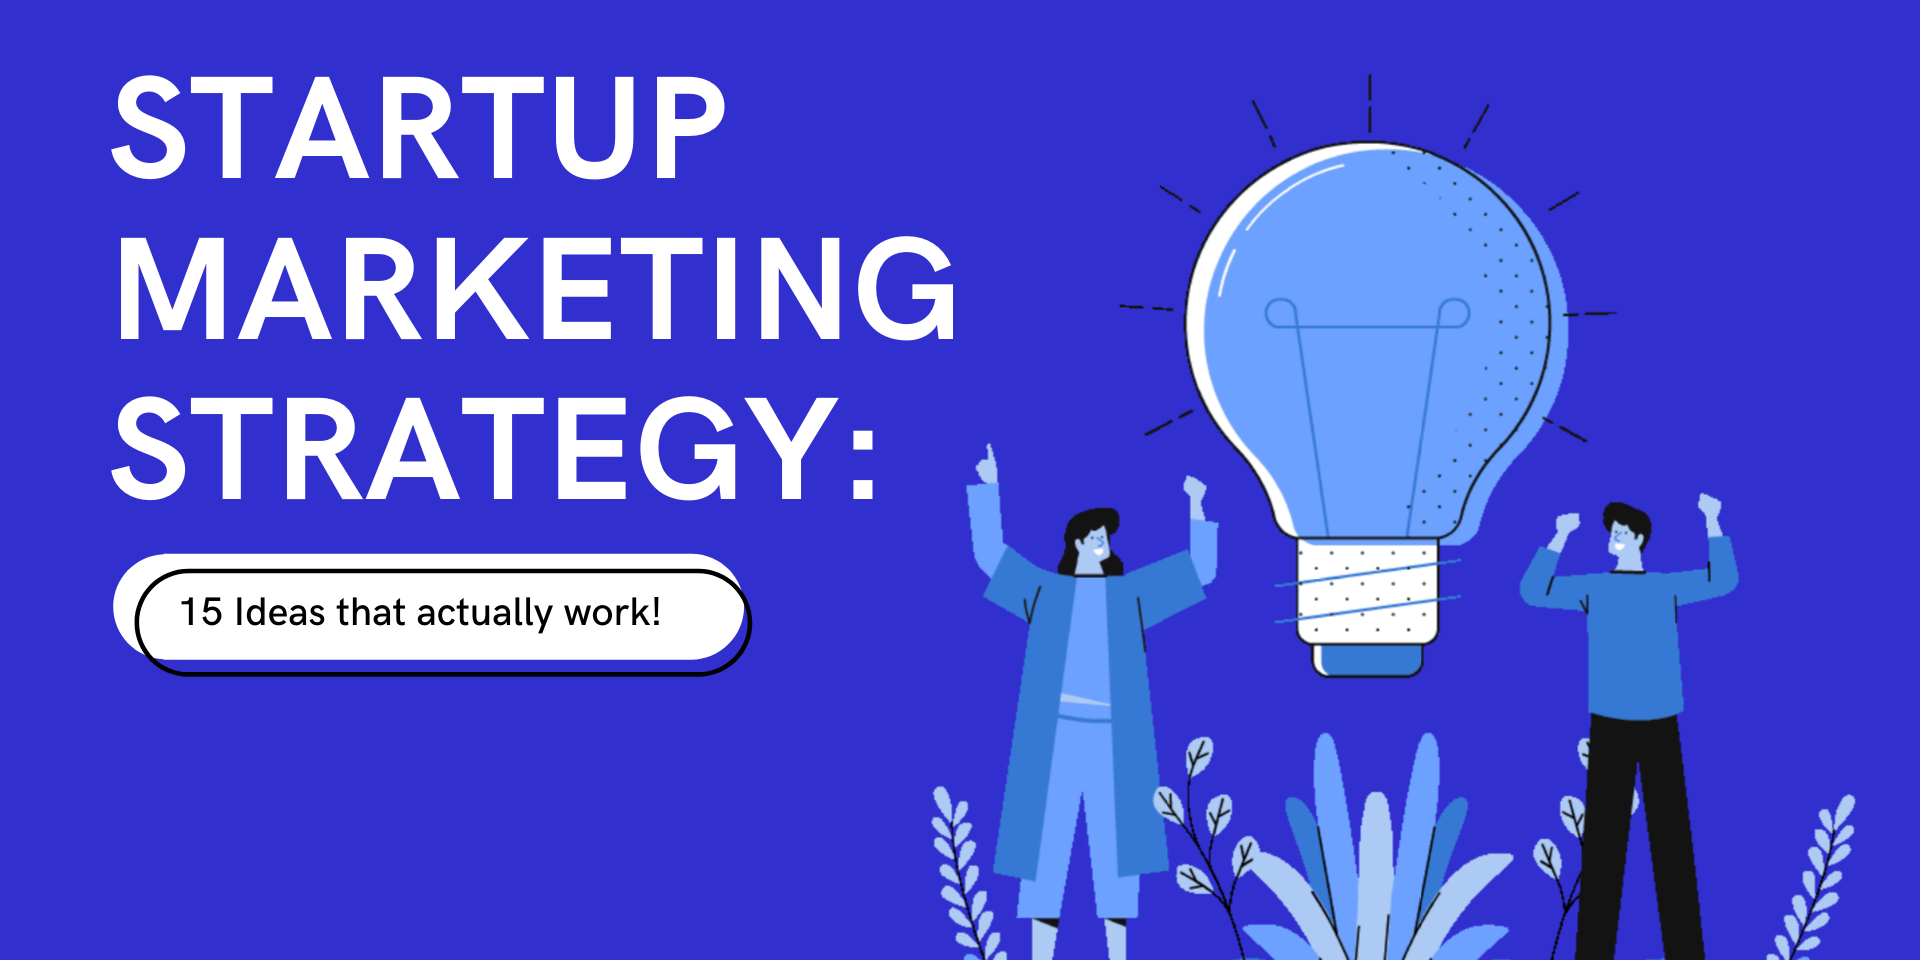 Startup Marketing Strategy Ideas That Work